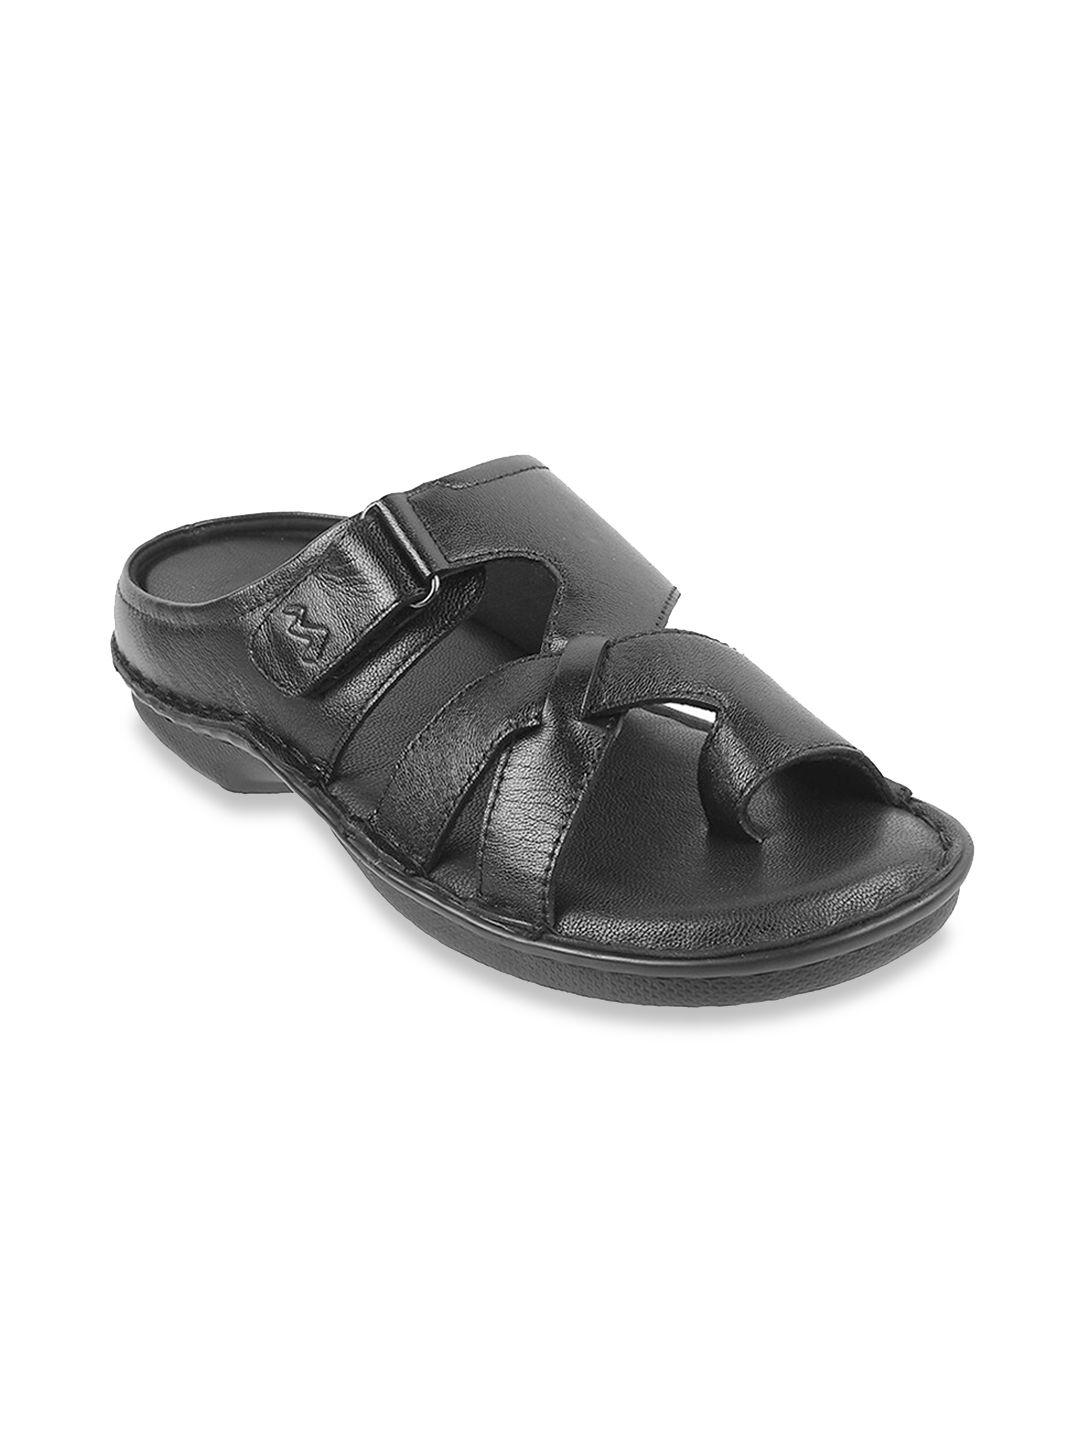 metro men black leather comfort sandals